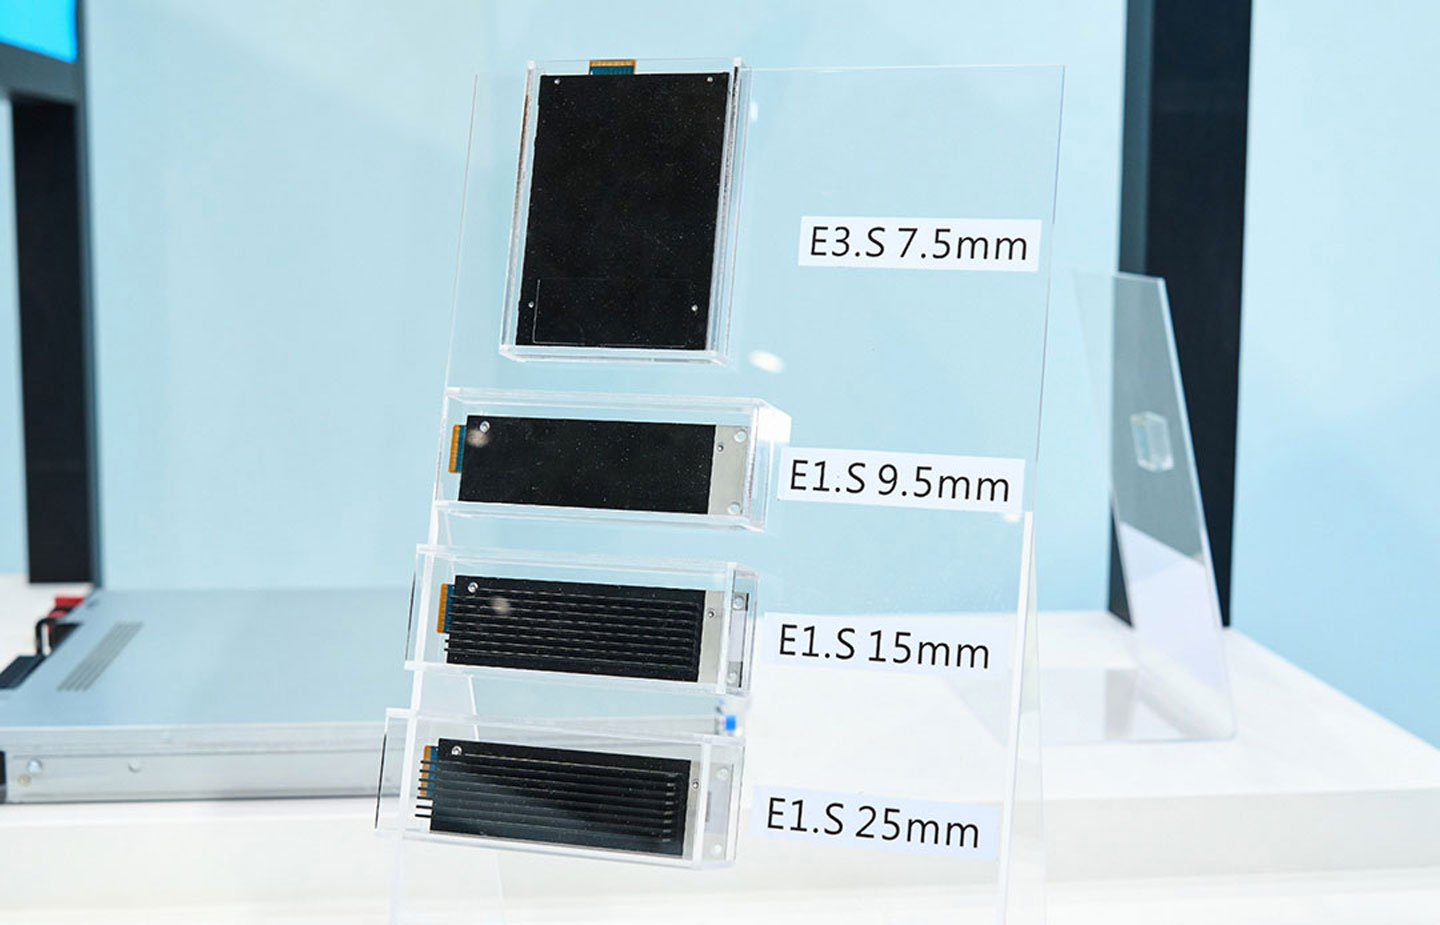 EDSFF 數據中心 SSD 採用 KIOXIA 新式的 E1.S 與 E3.S 形式，現場也提供了不同尺寸的產品比較。